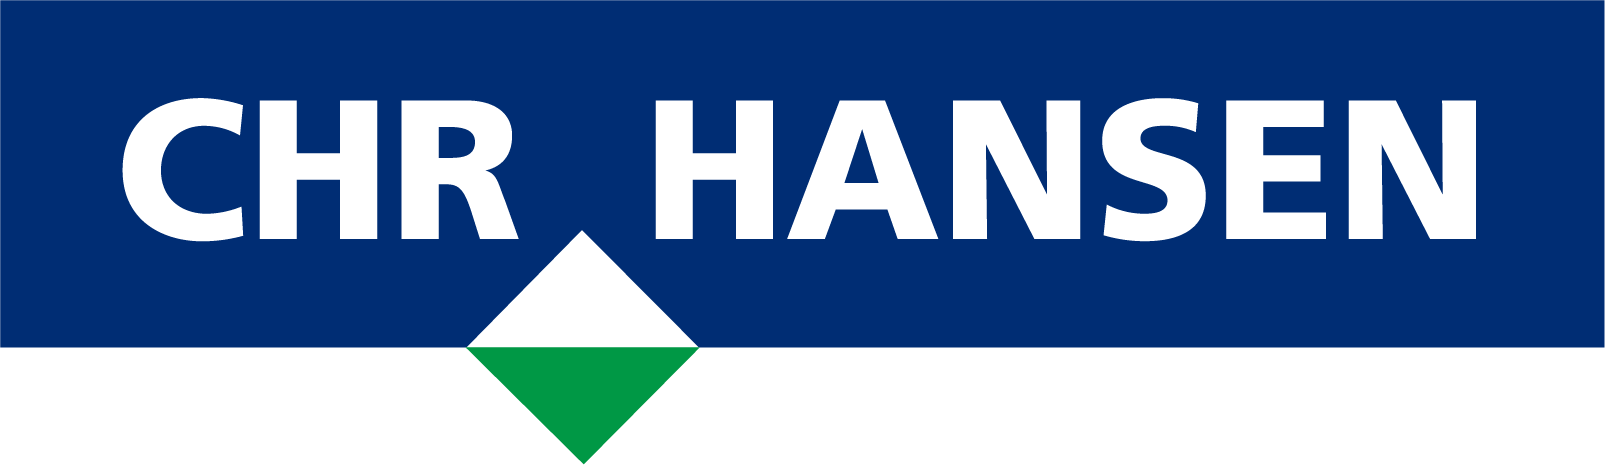 Chr. Hansen Holding logo